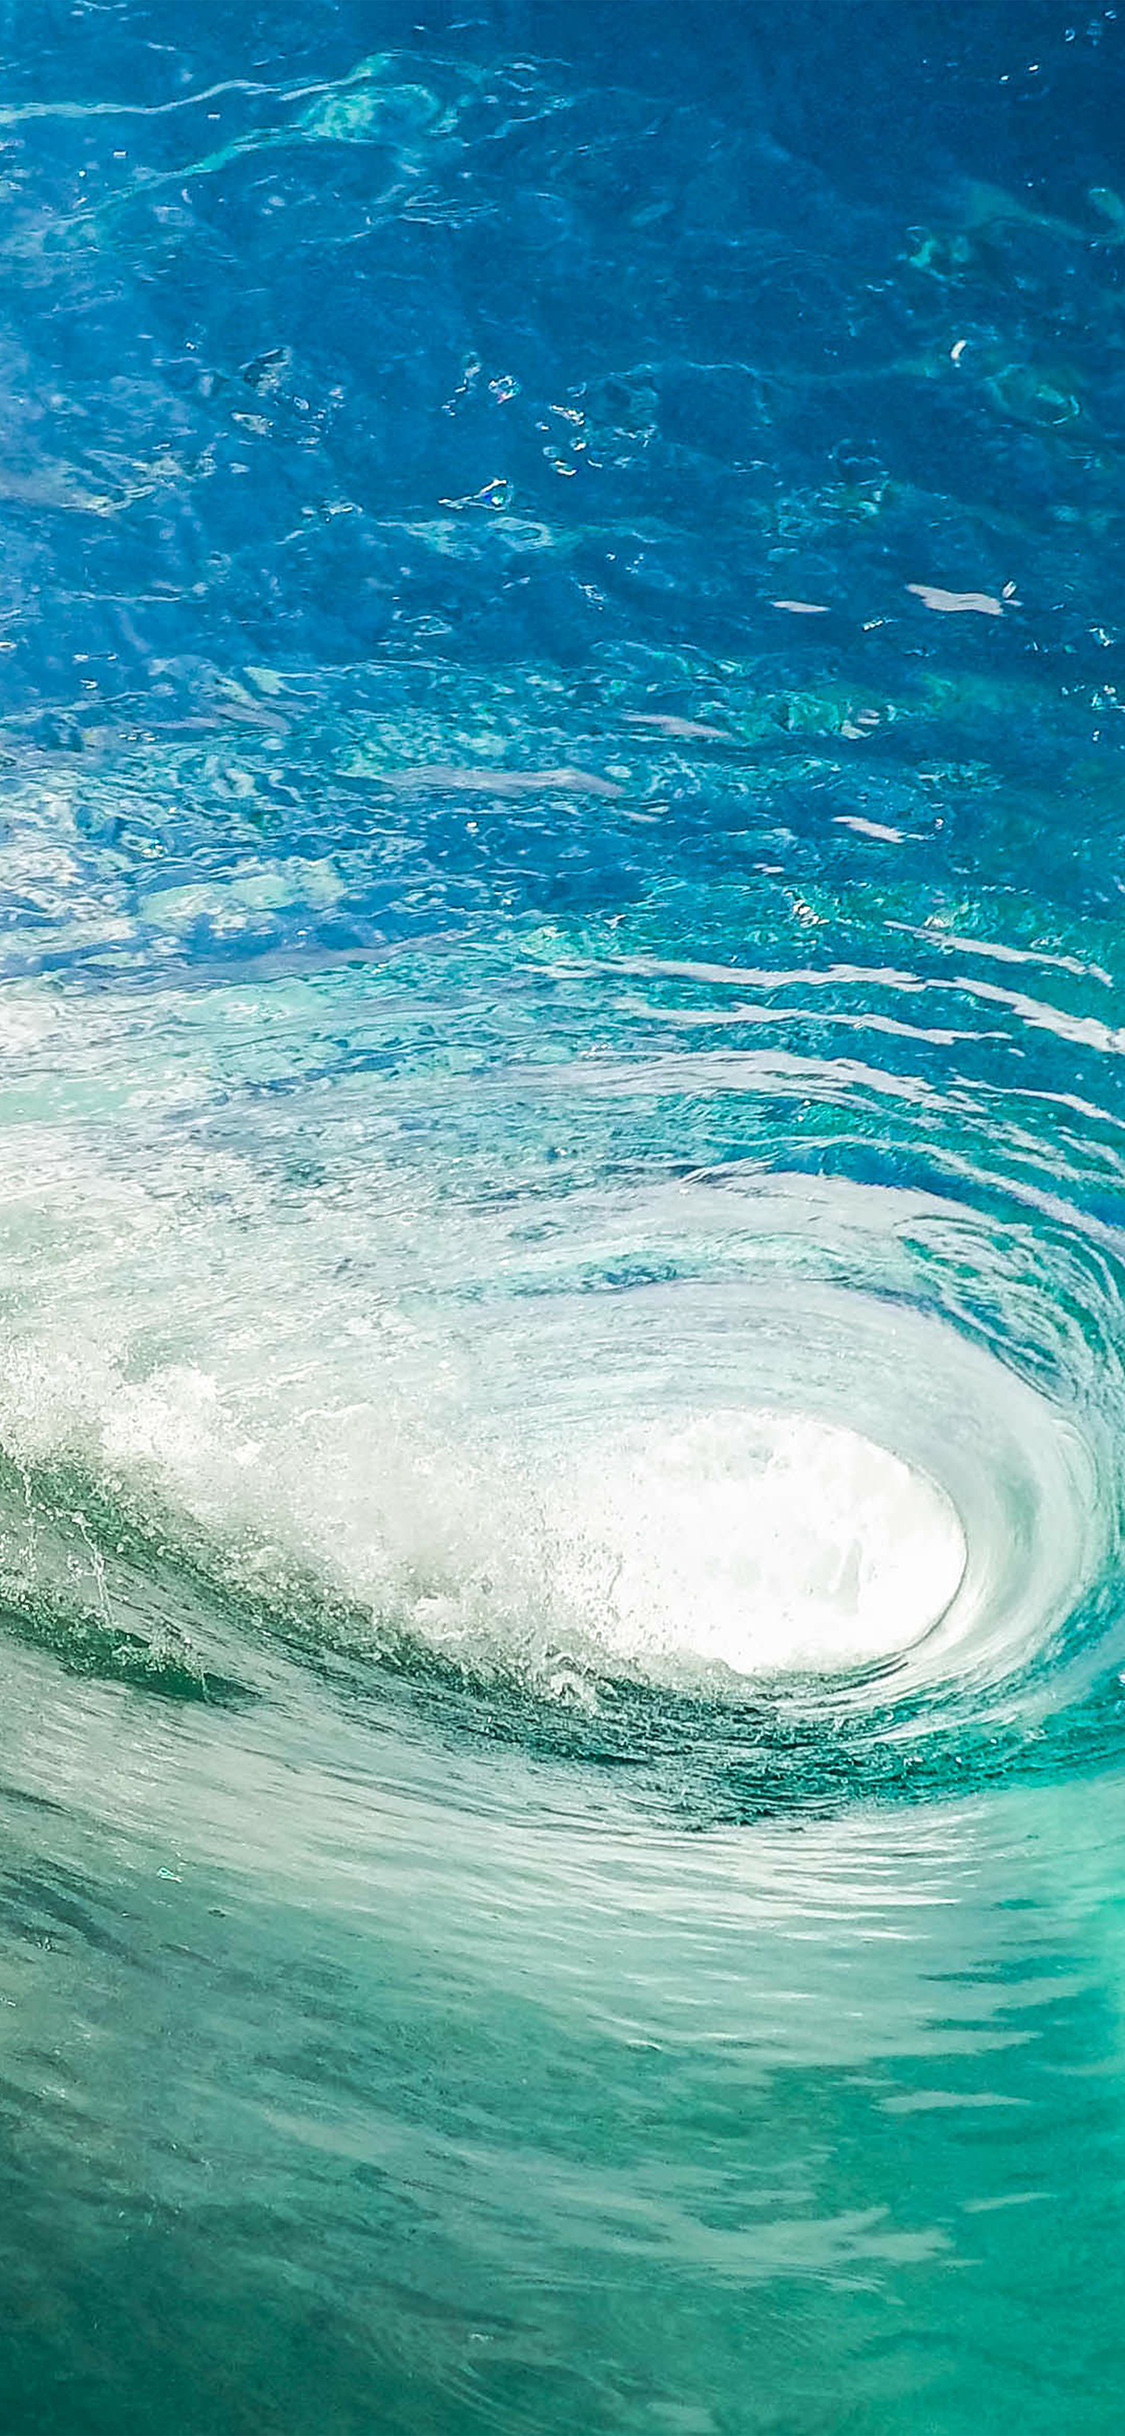 iPhone X wallpaper. wave cool summer vacation ocean blue green